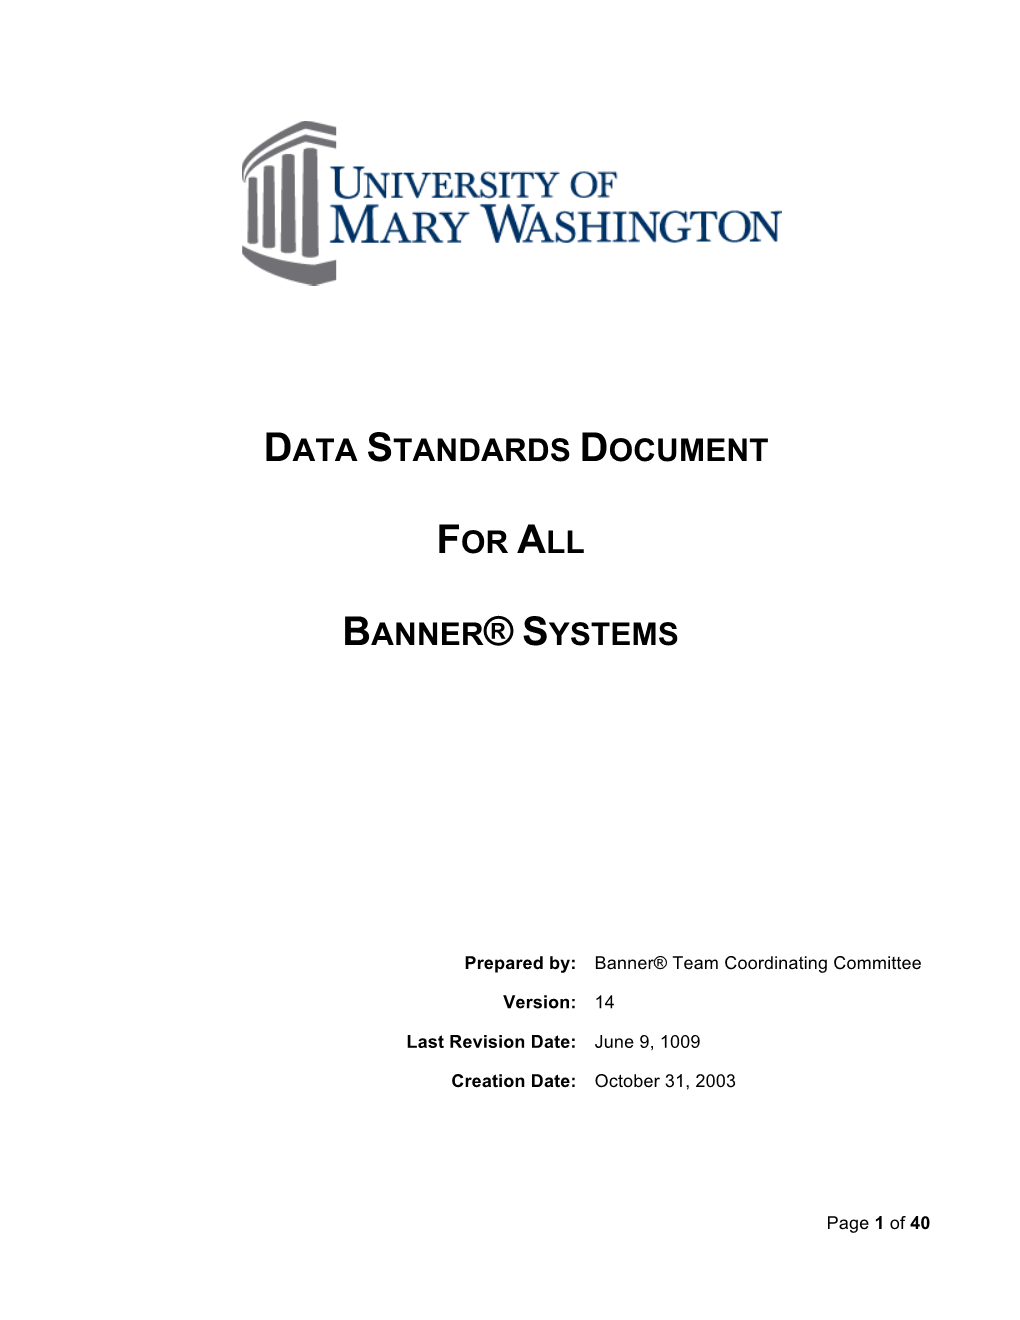 Data Standards Version